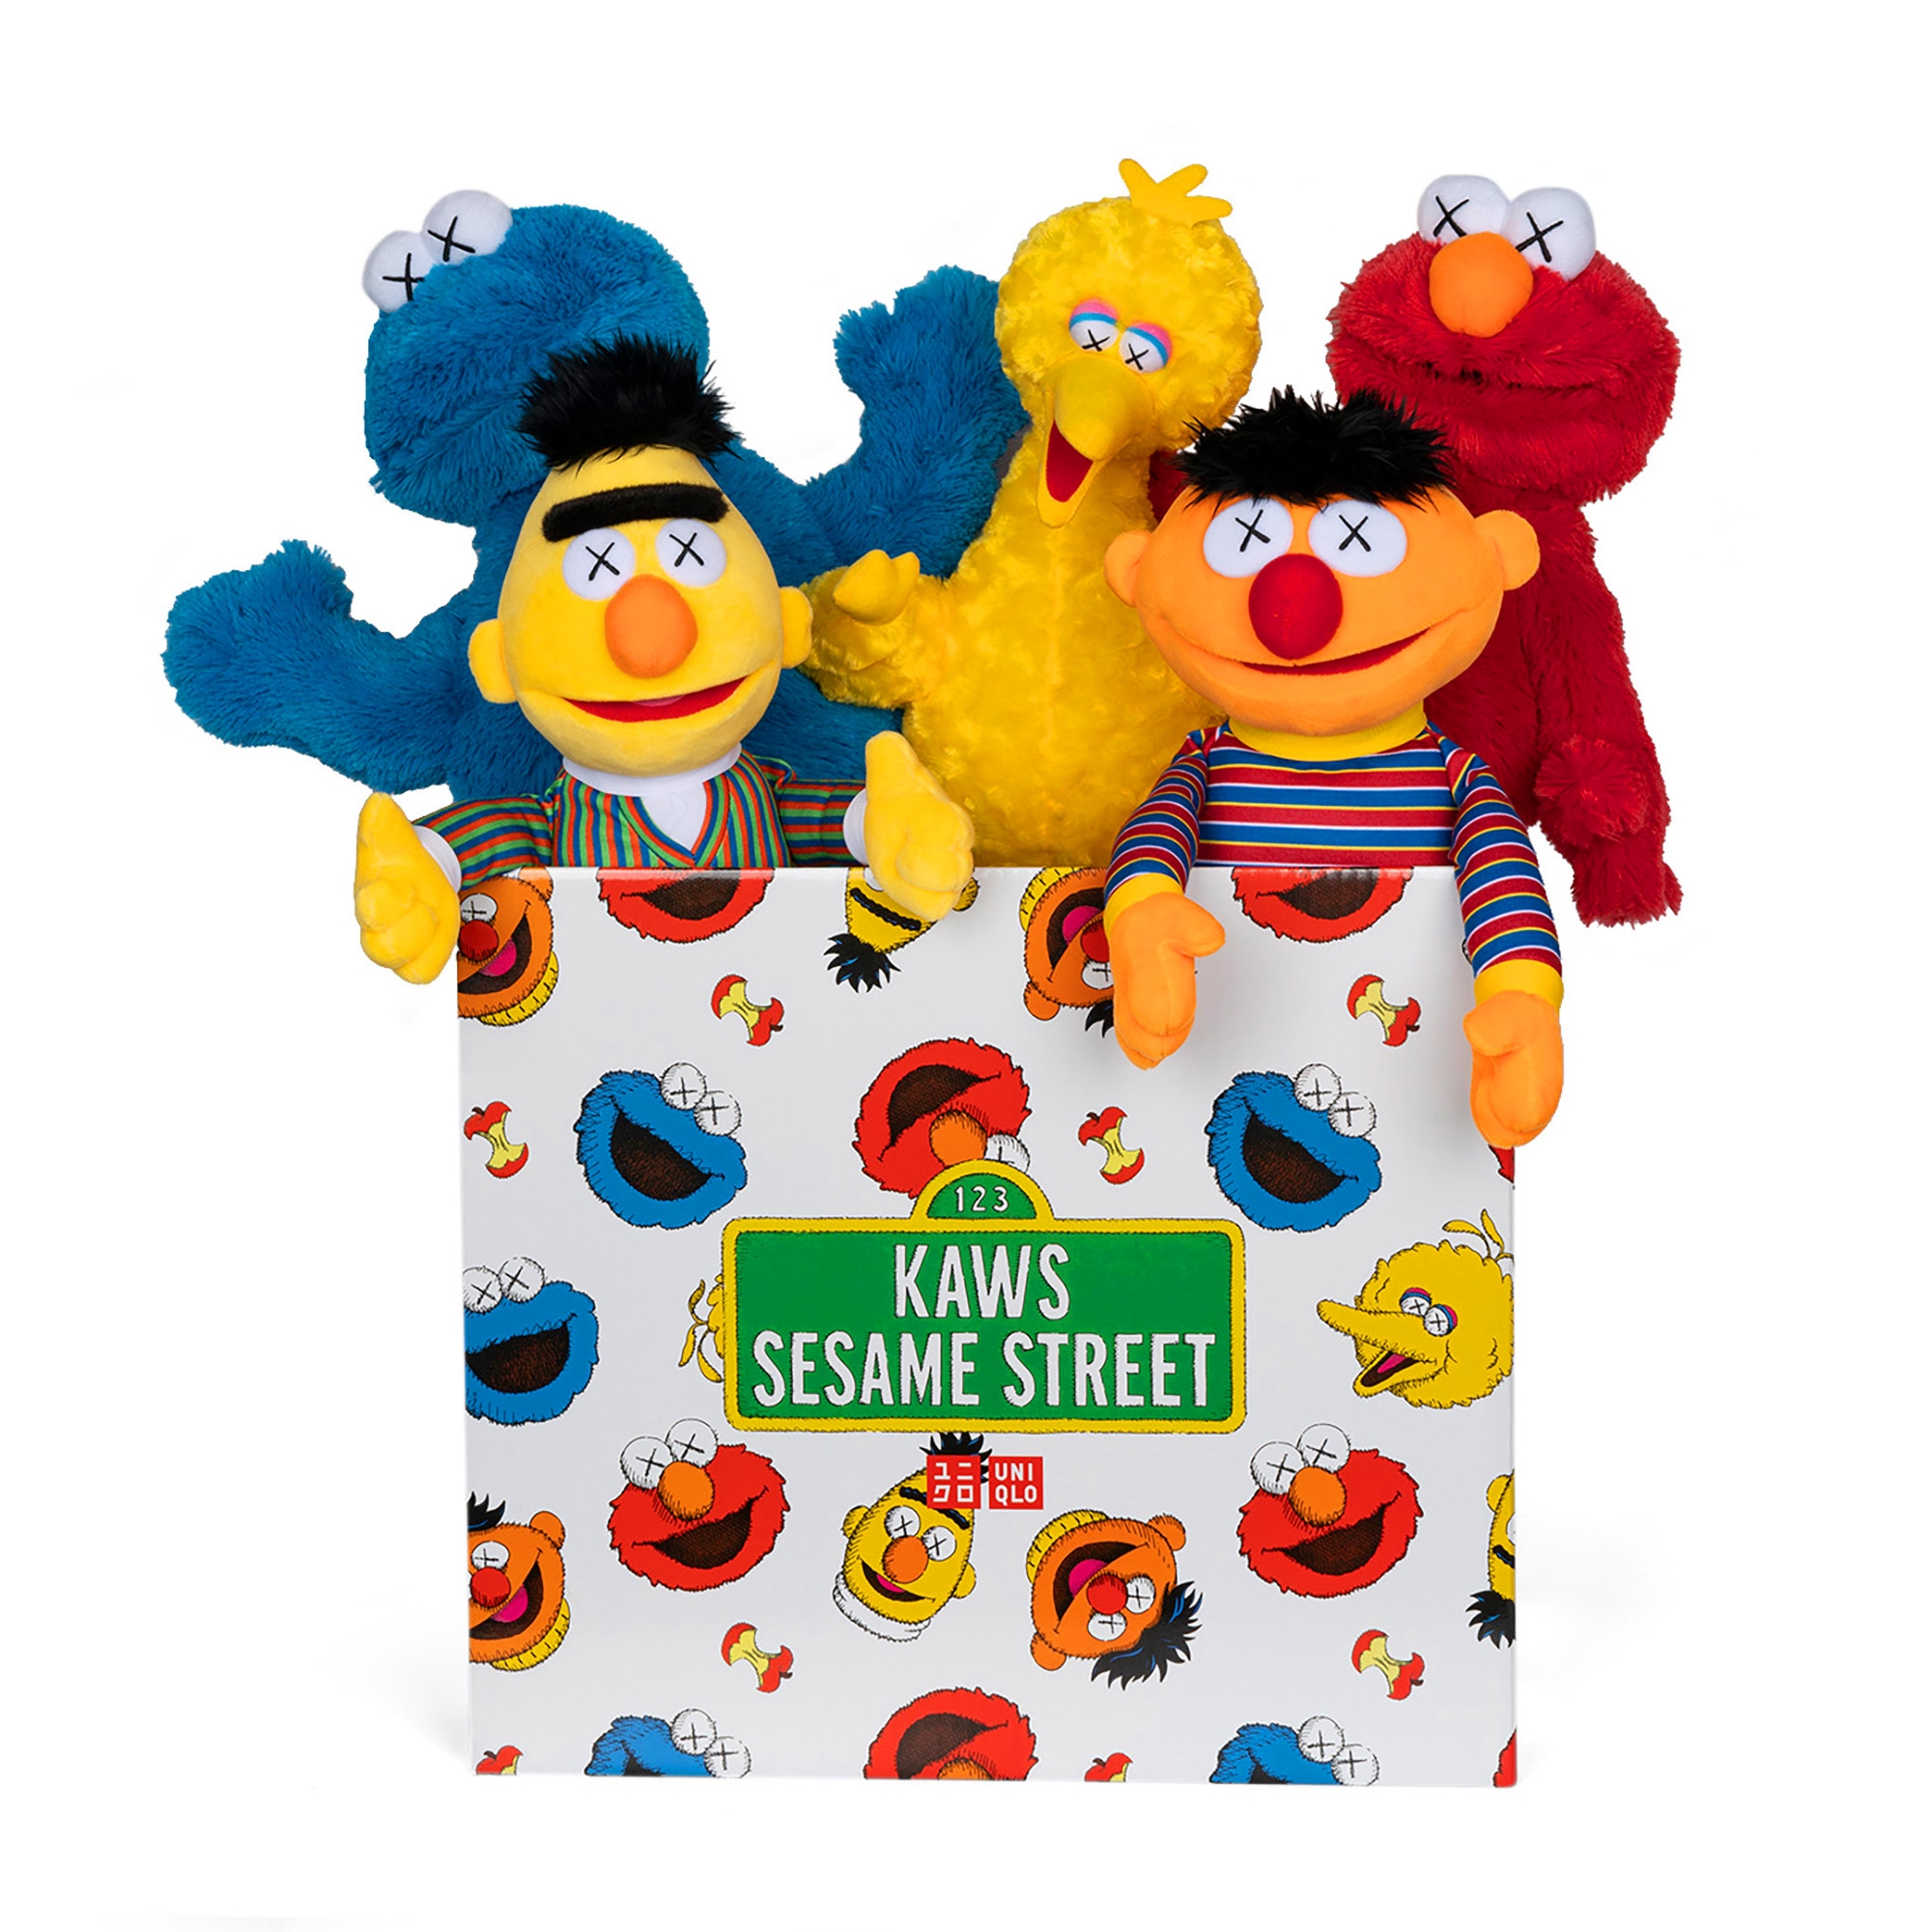 KAWS | Sesame Street Uniqlo Plush Toy Complete Box Set (2018 